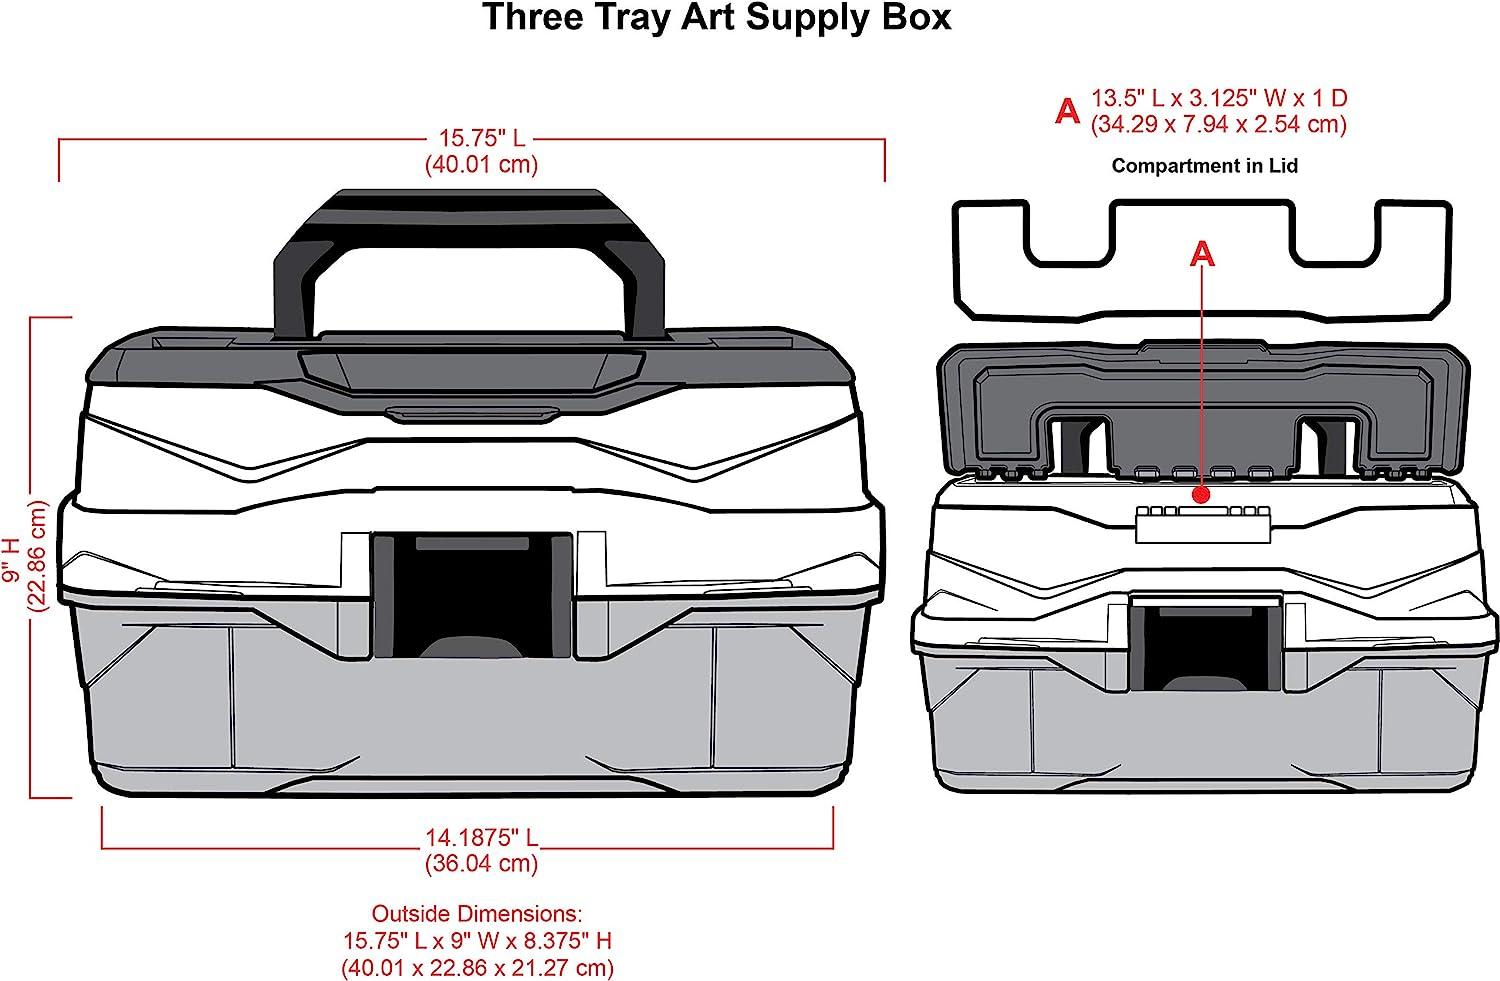 ArtBin 6893AG 3-Tray Art Supply Box, Portable Art & Craft Organizer with  Lift-Up Trays, [1] Plastic Storage Case, Gray/Black